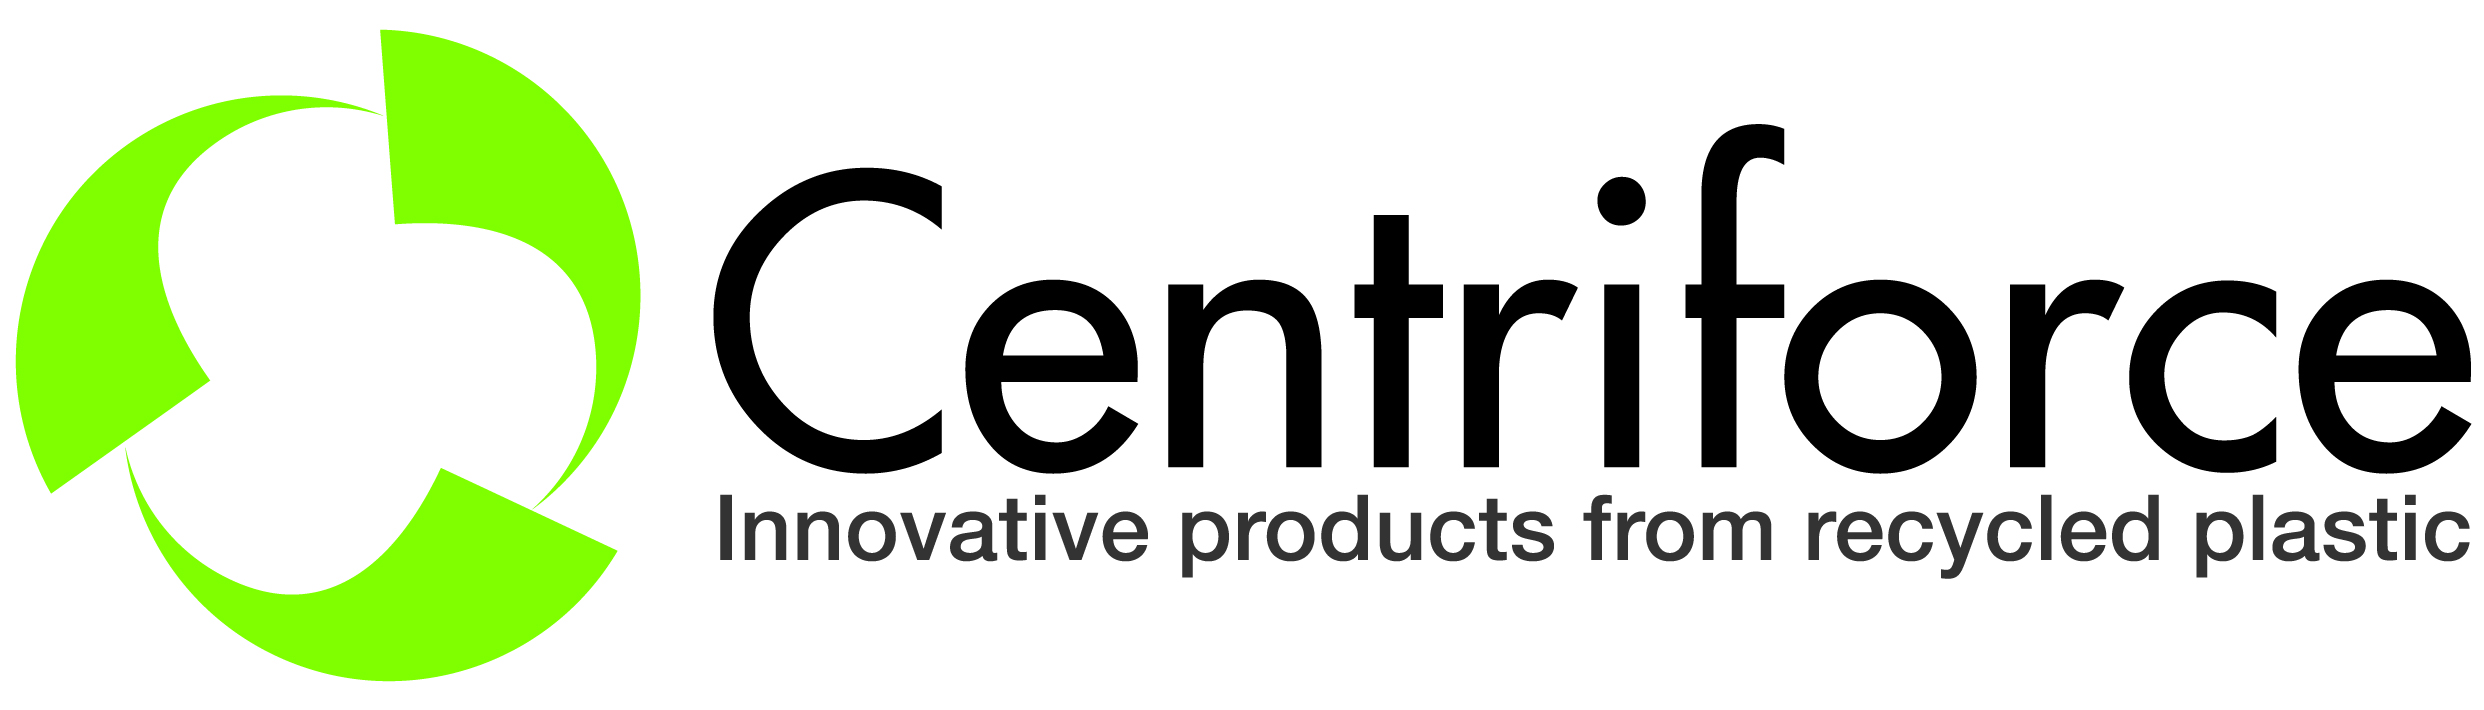 Centiforce logo